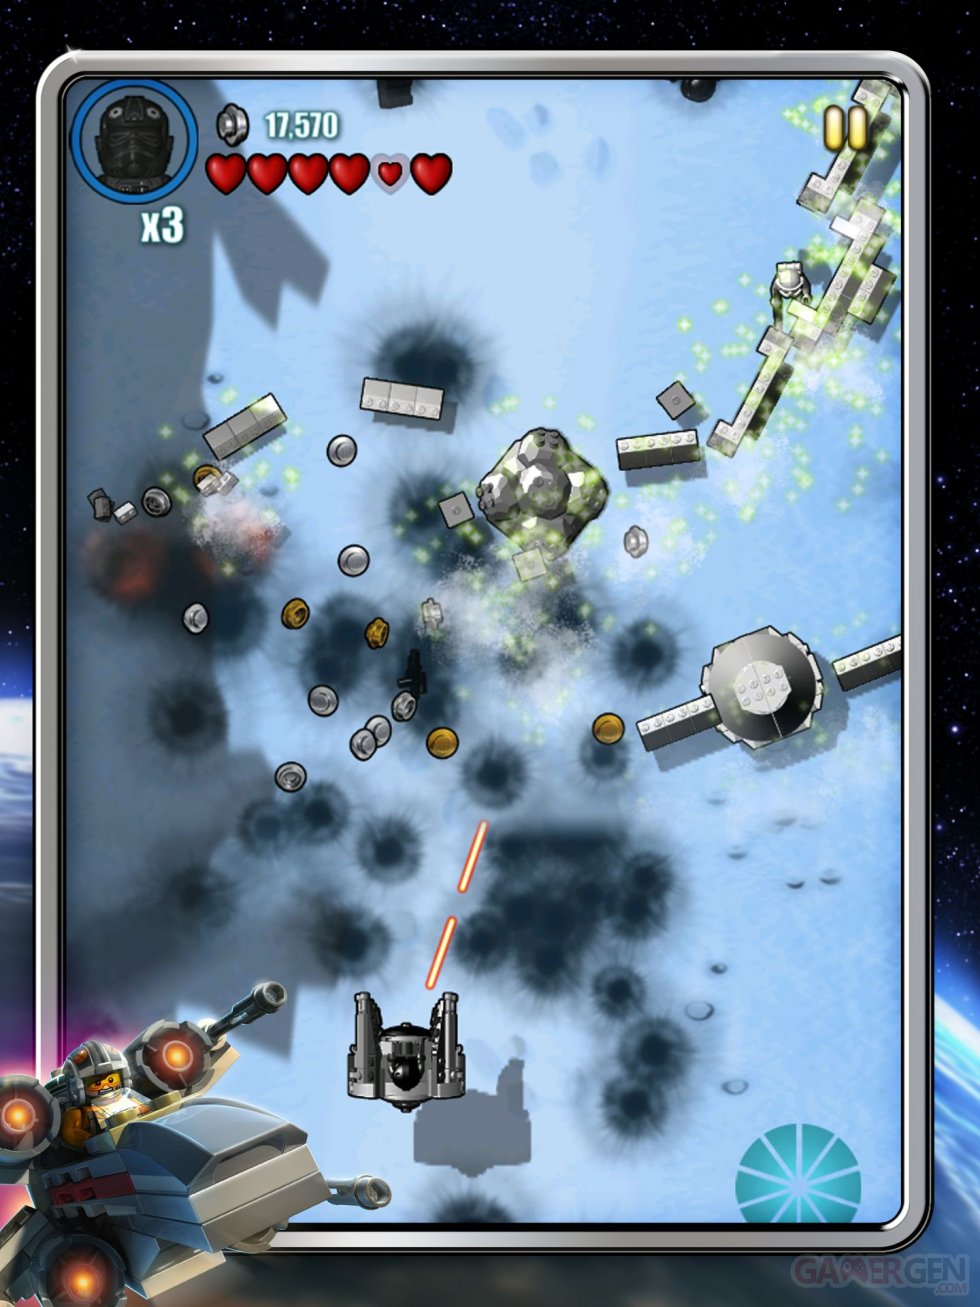 lego-star-wars-microfighters-screenshot- (5)